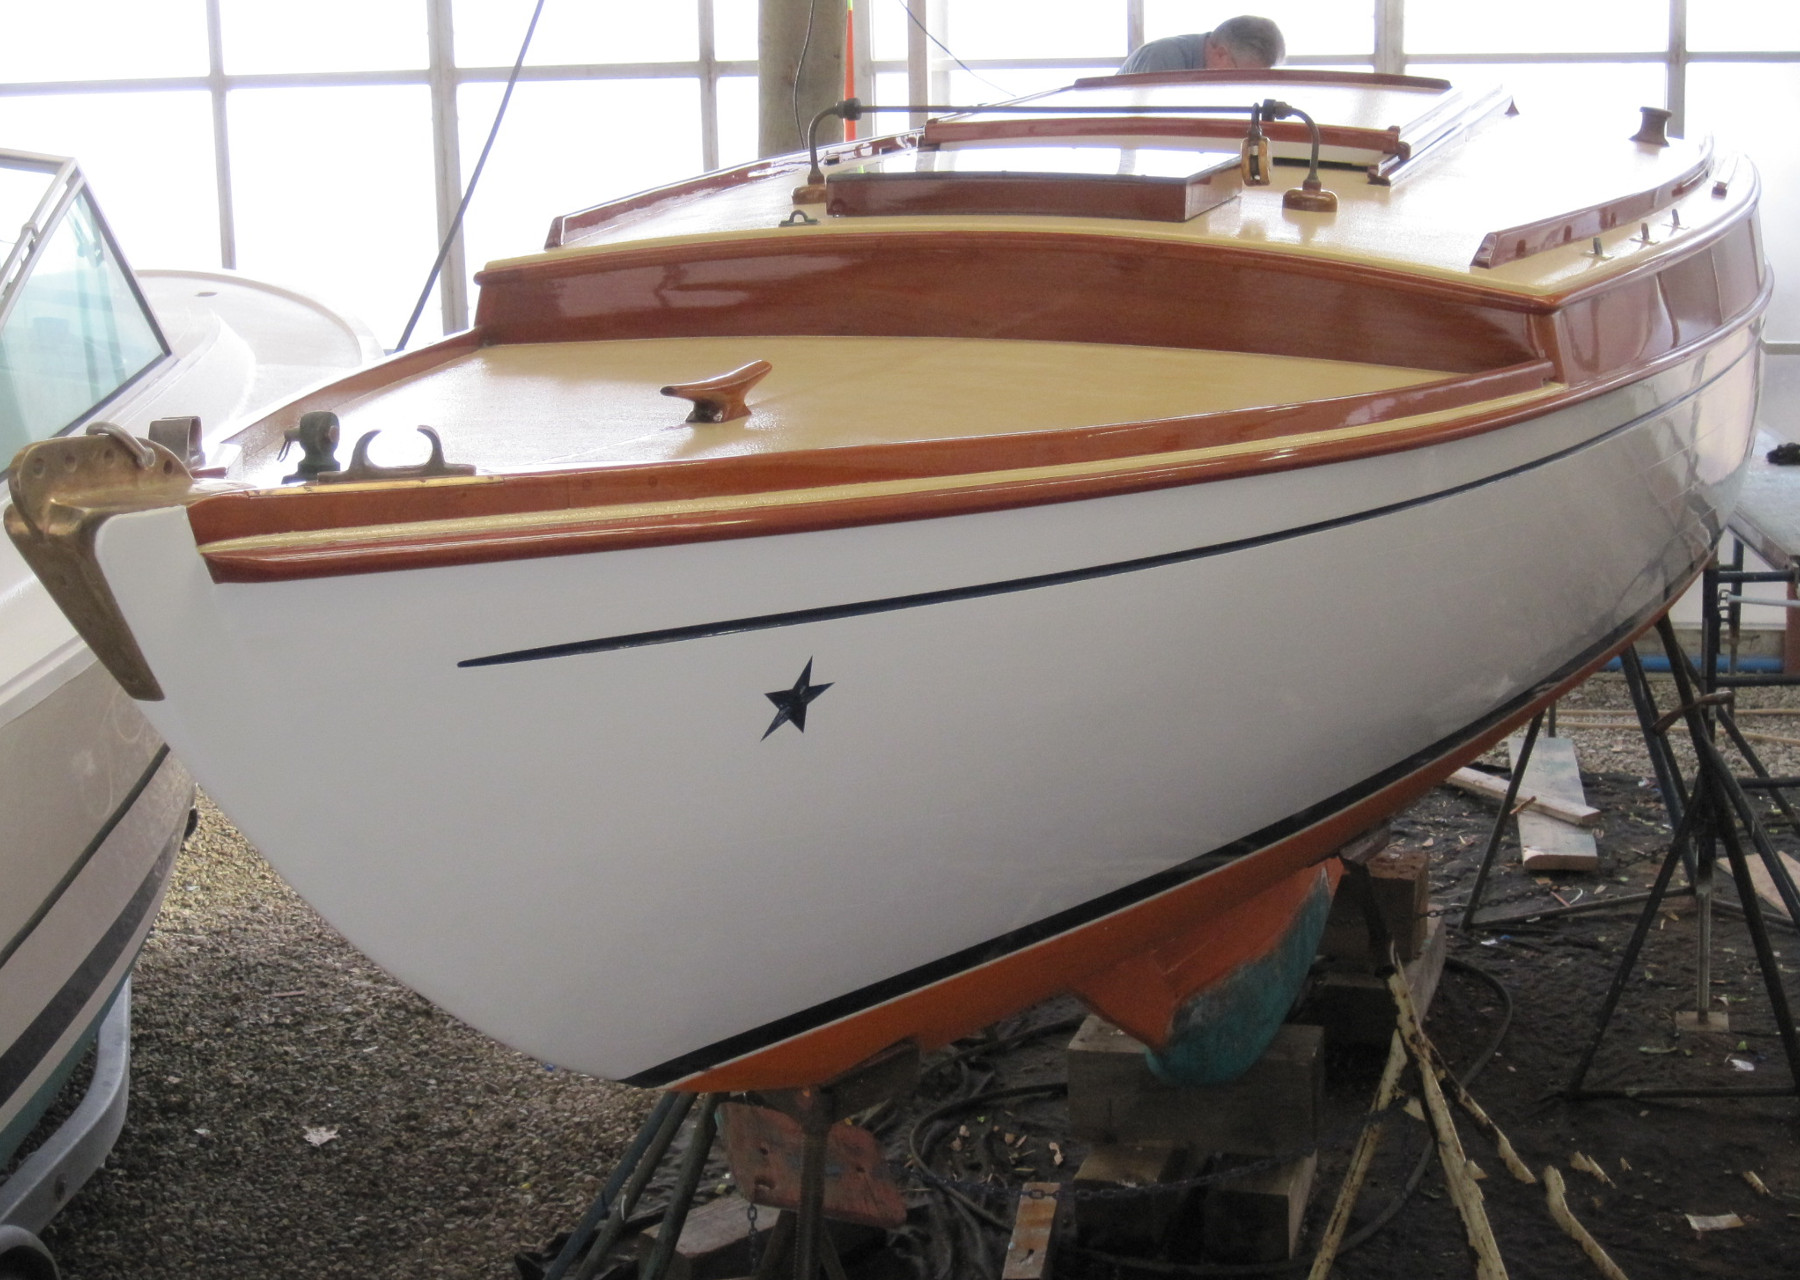 Wooden Boat Restoration - Kestrel - From the waterline up, Kestrel is finished.